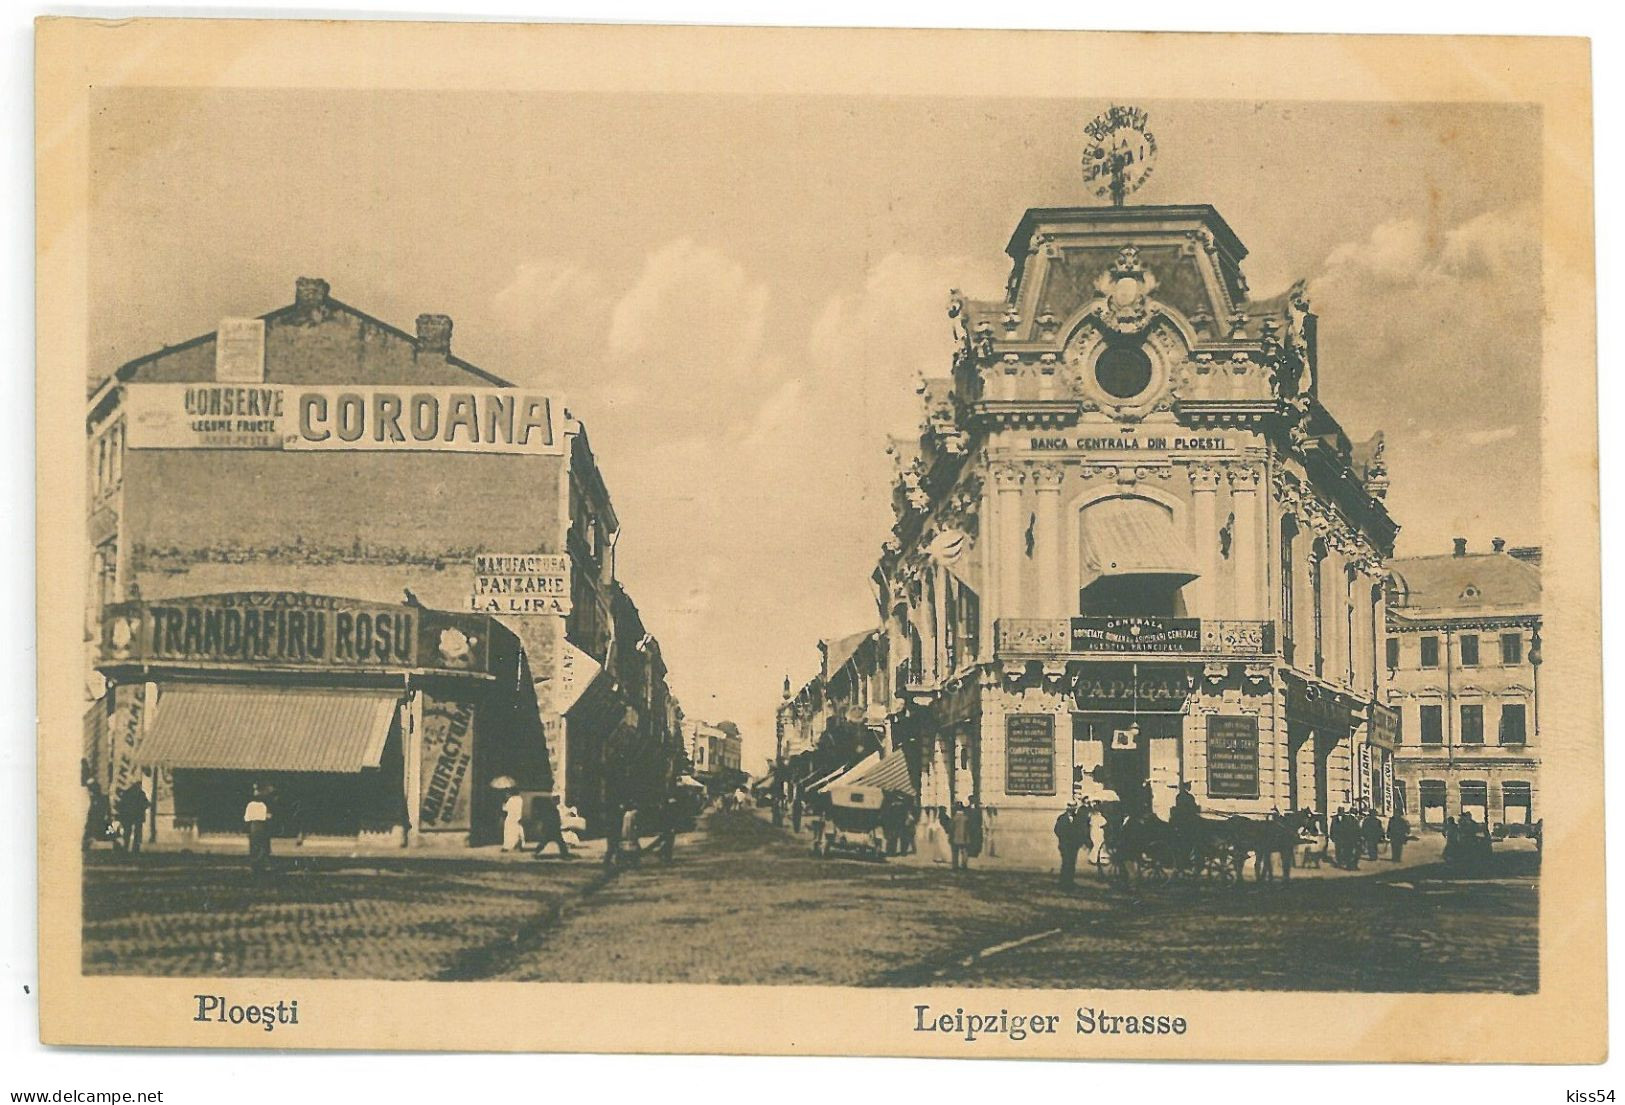 RO 47 - 25350 PLOIESTI, Market, Bazar, Romania - Old Postcard - Unused - Roumanie